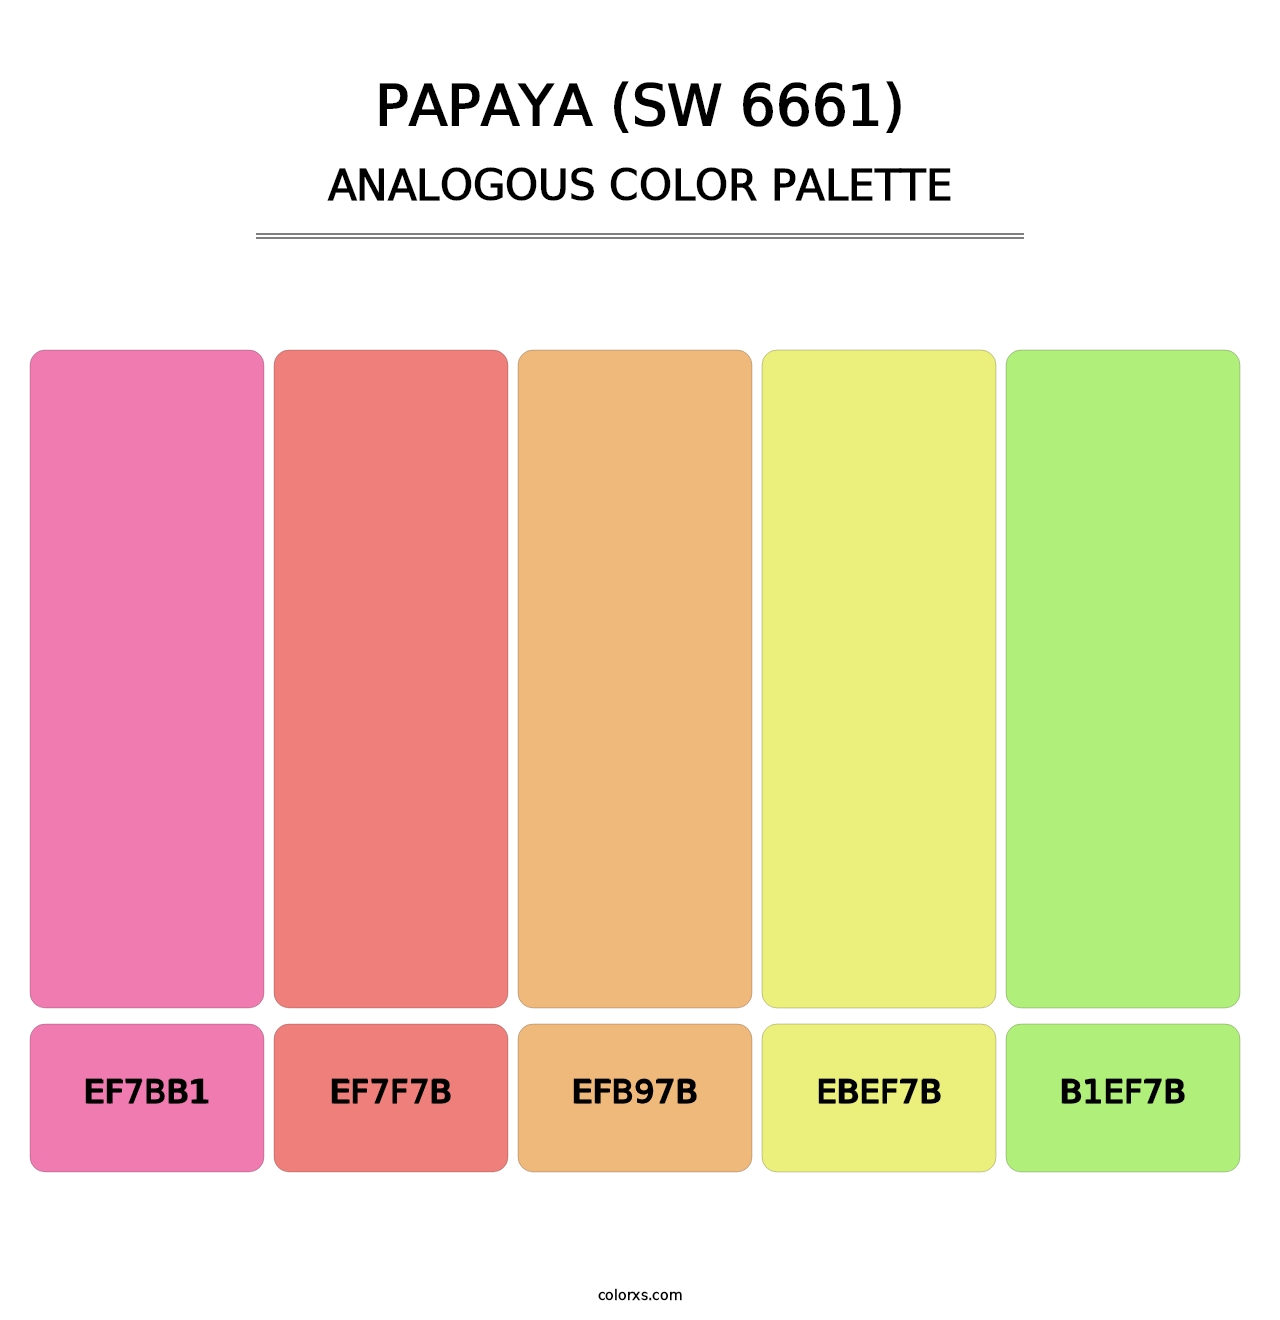 Papaya (SW 6661) - Analogous Color Palette